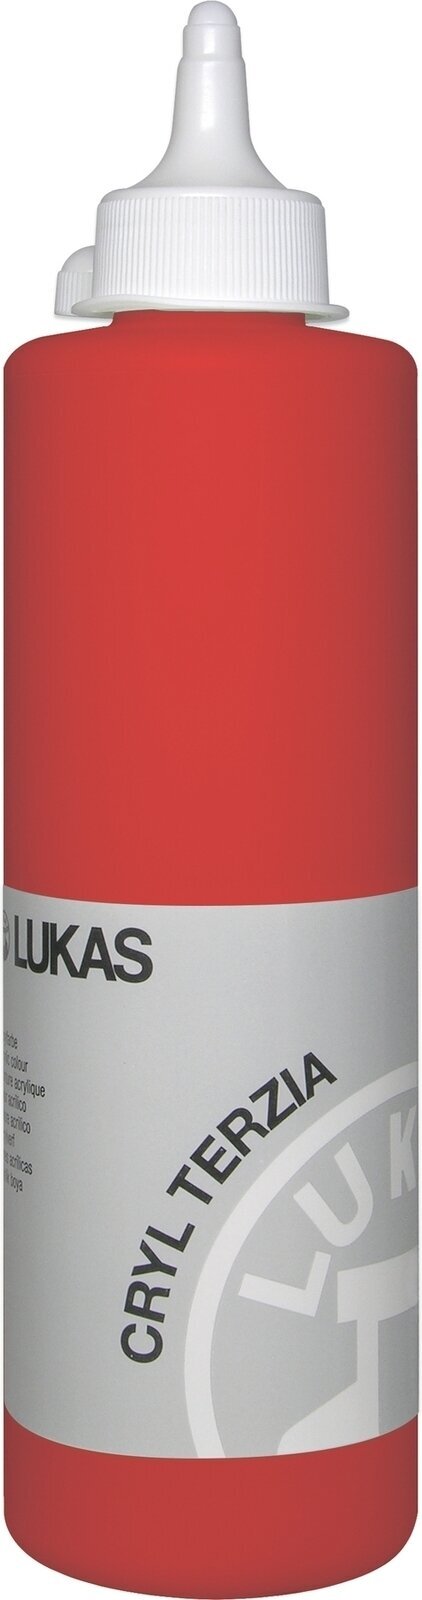 Acrylic Paint Lukas Cryl Terzia Acrylic Paint Plastic Bottle Acrylic Paint Cadmium Red Light Hue 500 ml 1 pc